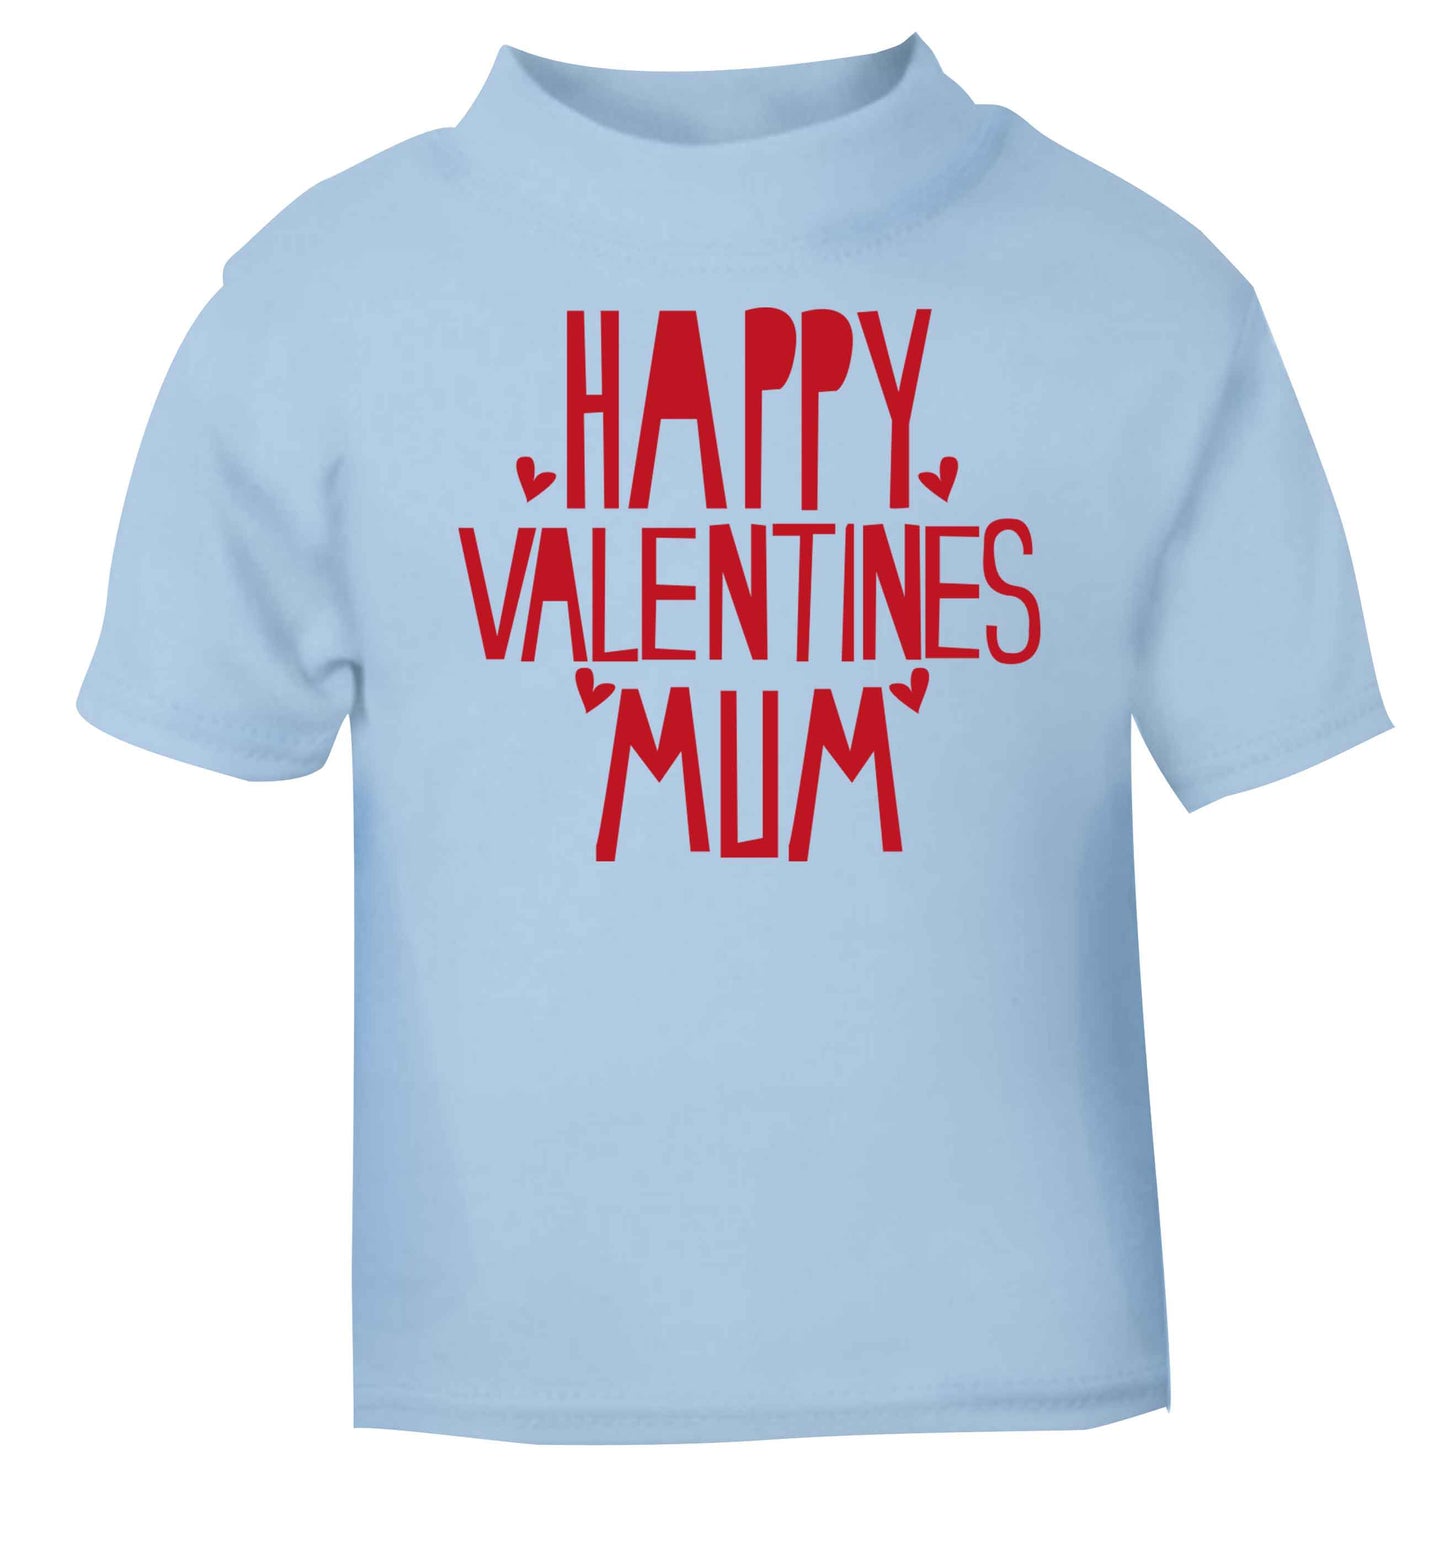 Happy valentines mum light blue baby toddler Tshirt 2 Years